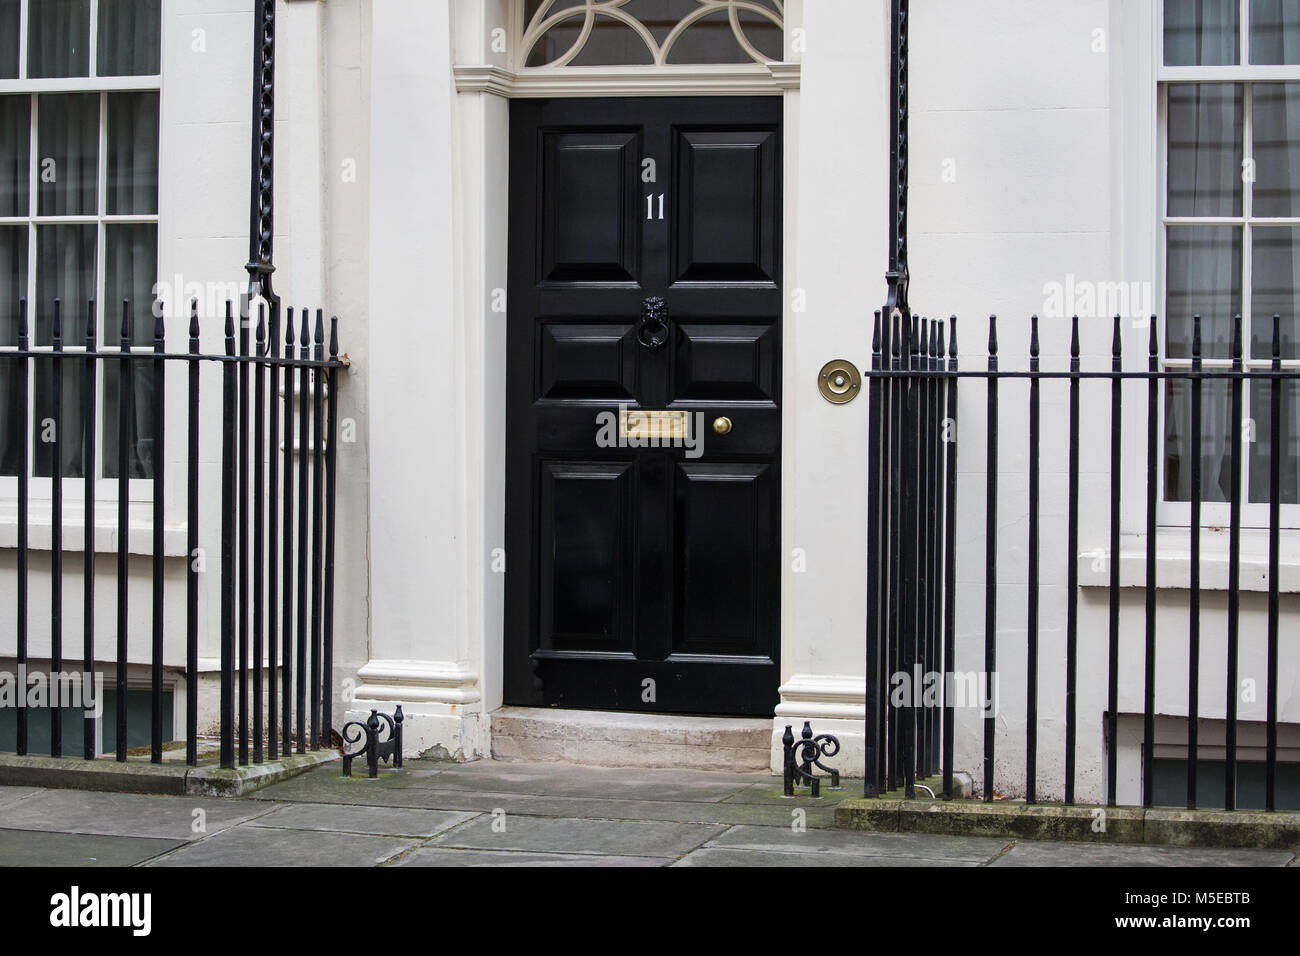 London, UK. 10th January, 2018. The entrance to No. 11 Downing Street. Stock Photo